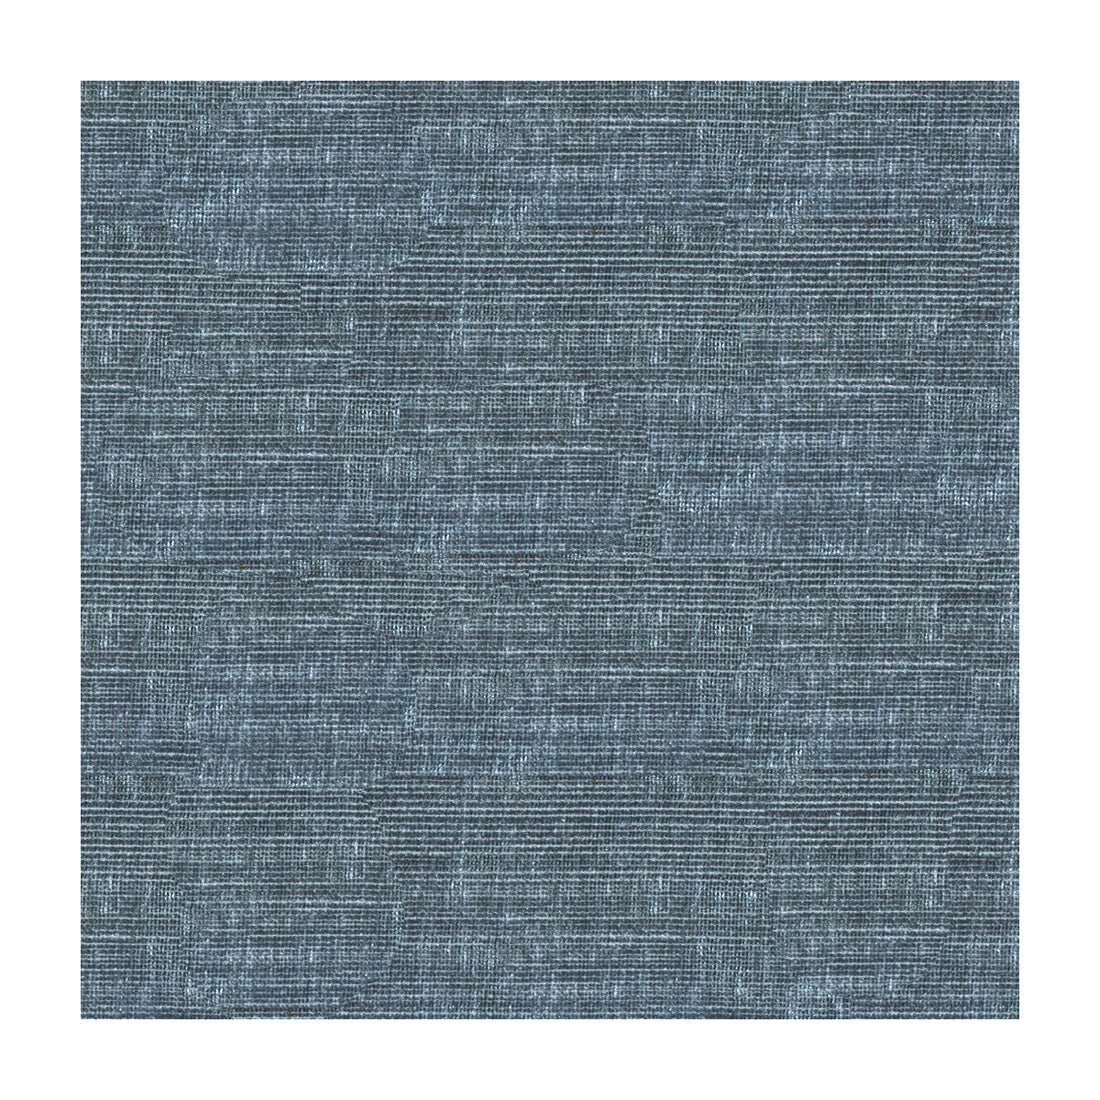 Kravet Smart fabric in 34191-15 color - pattern 34191.15.0 - by Kravet Smart